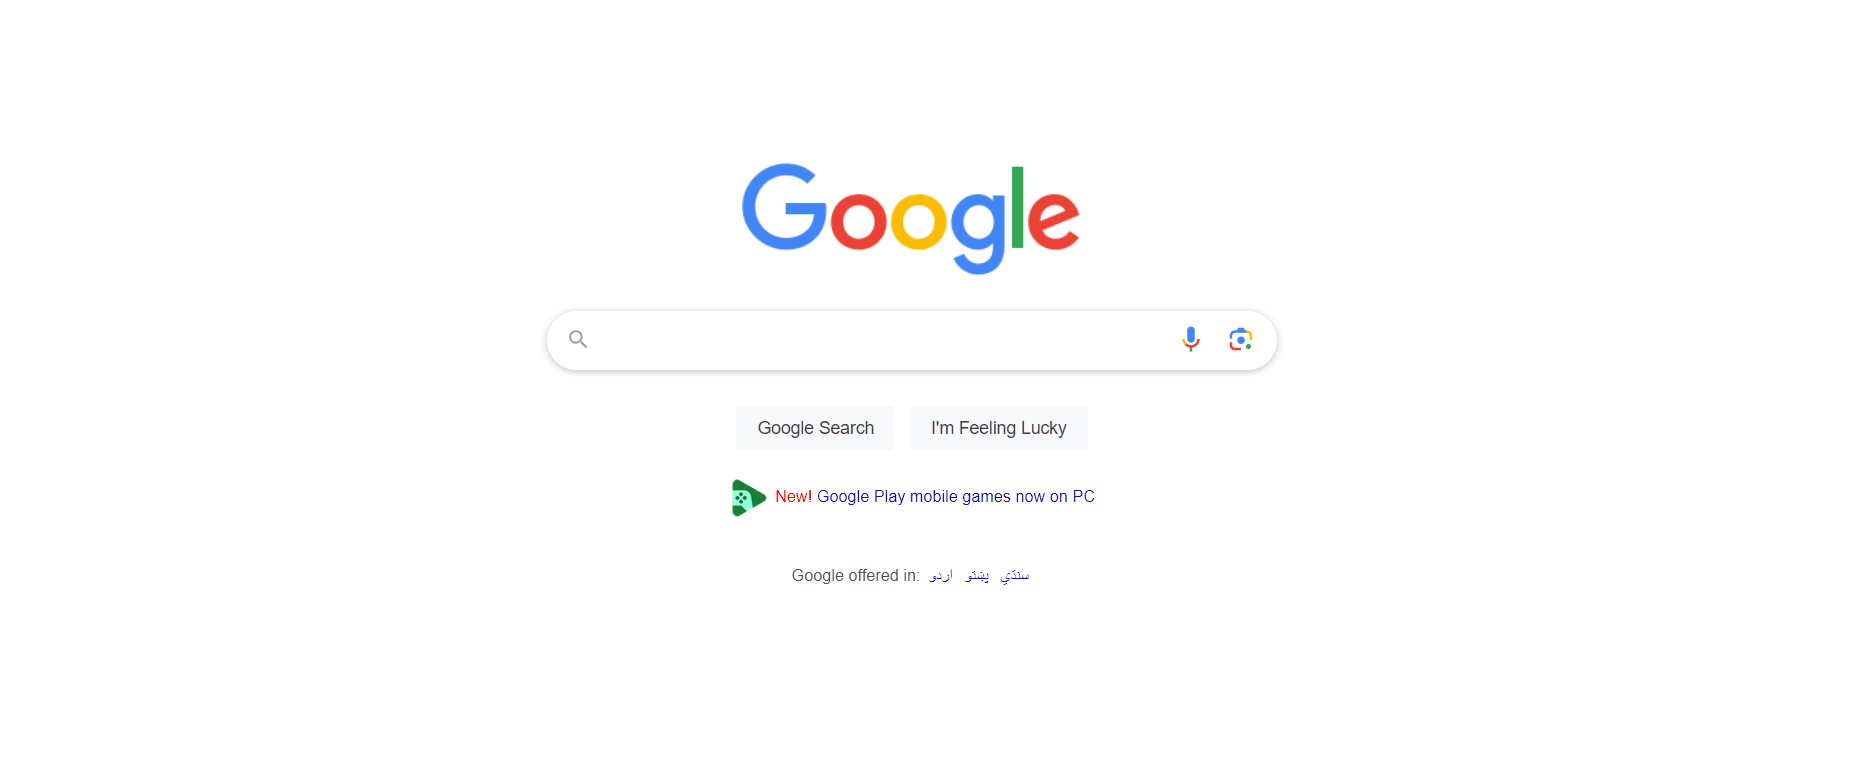 Google's Homepage